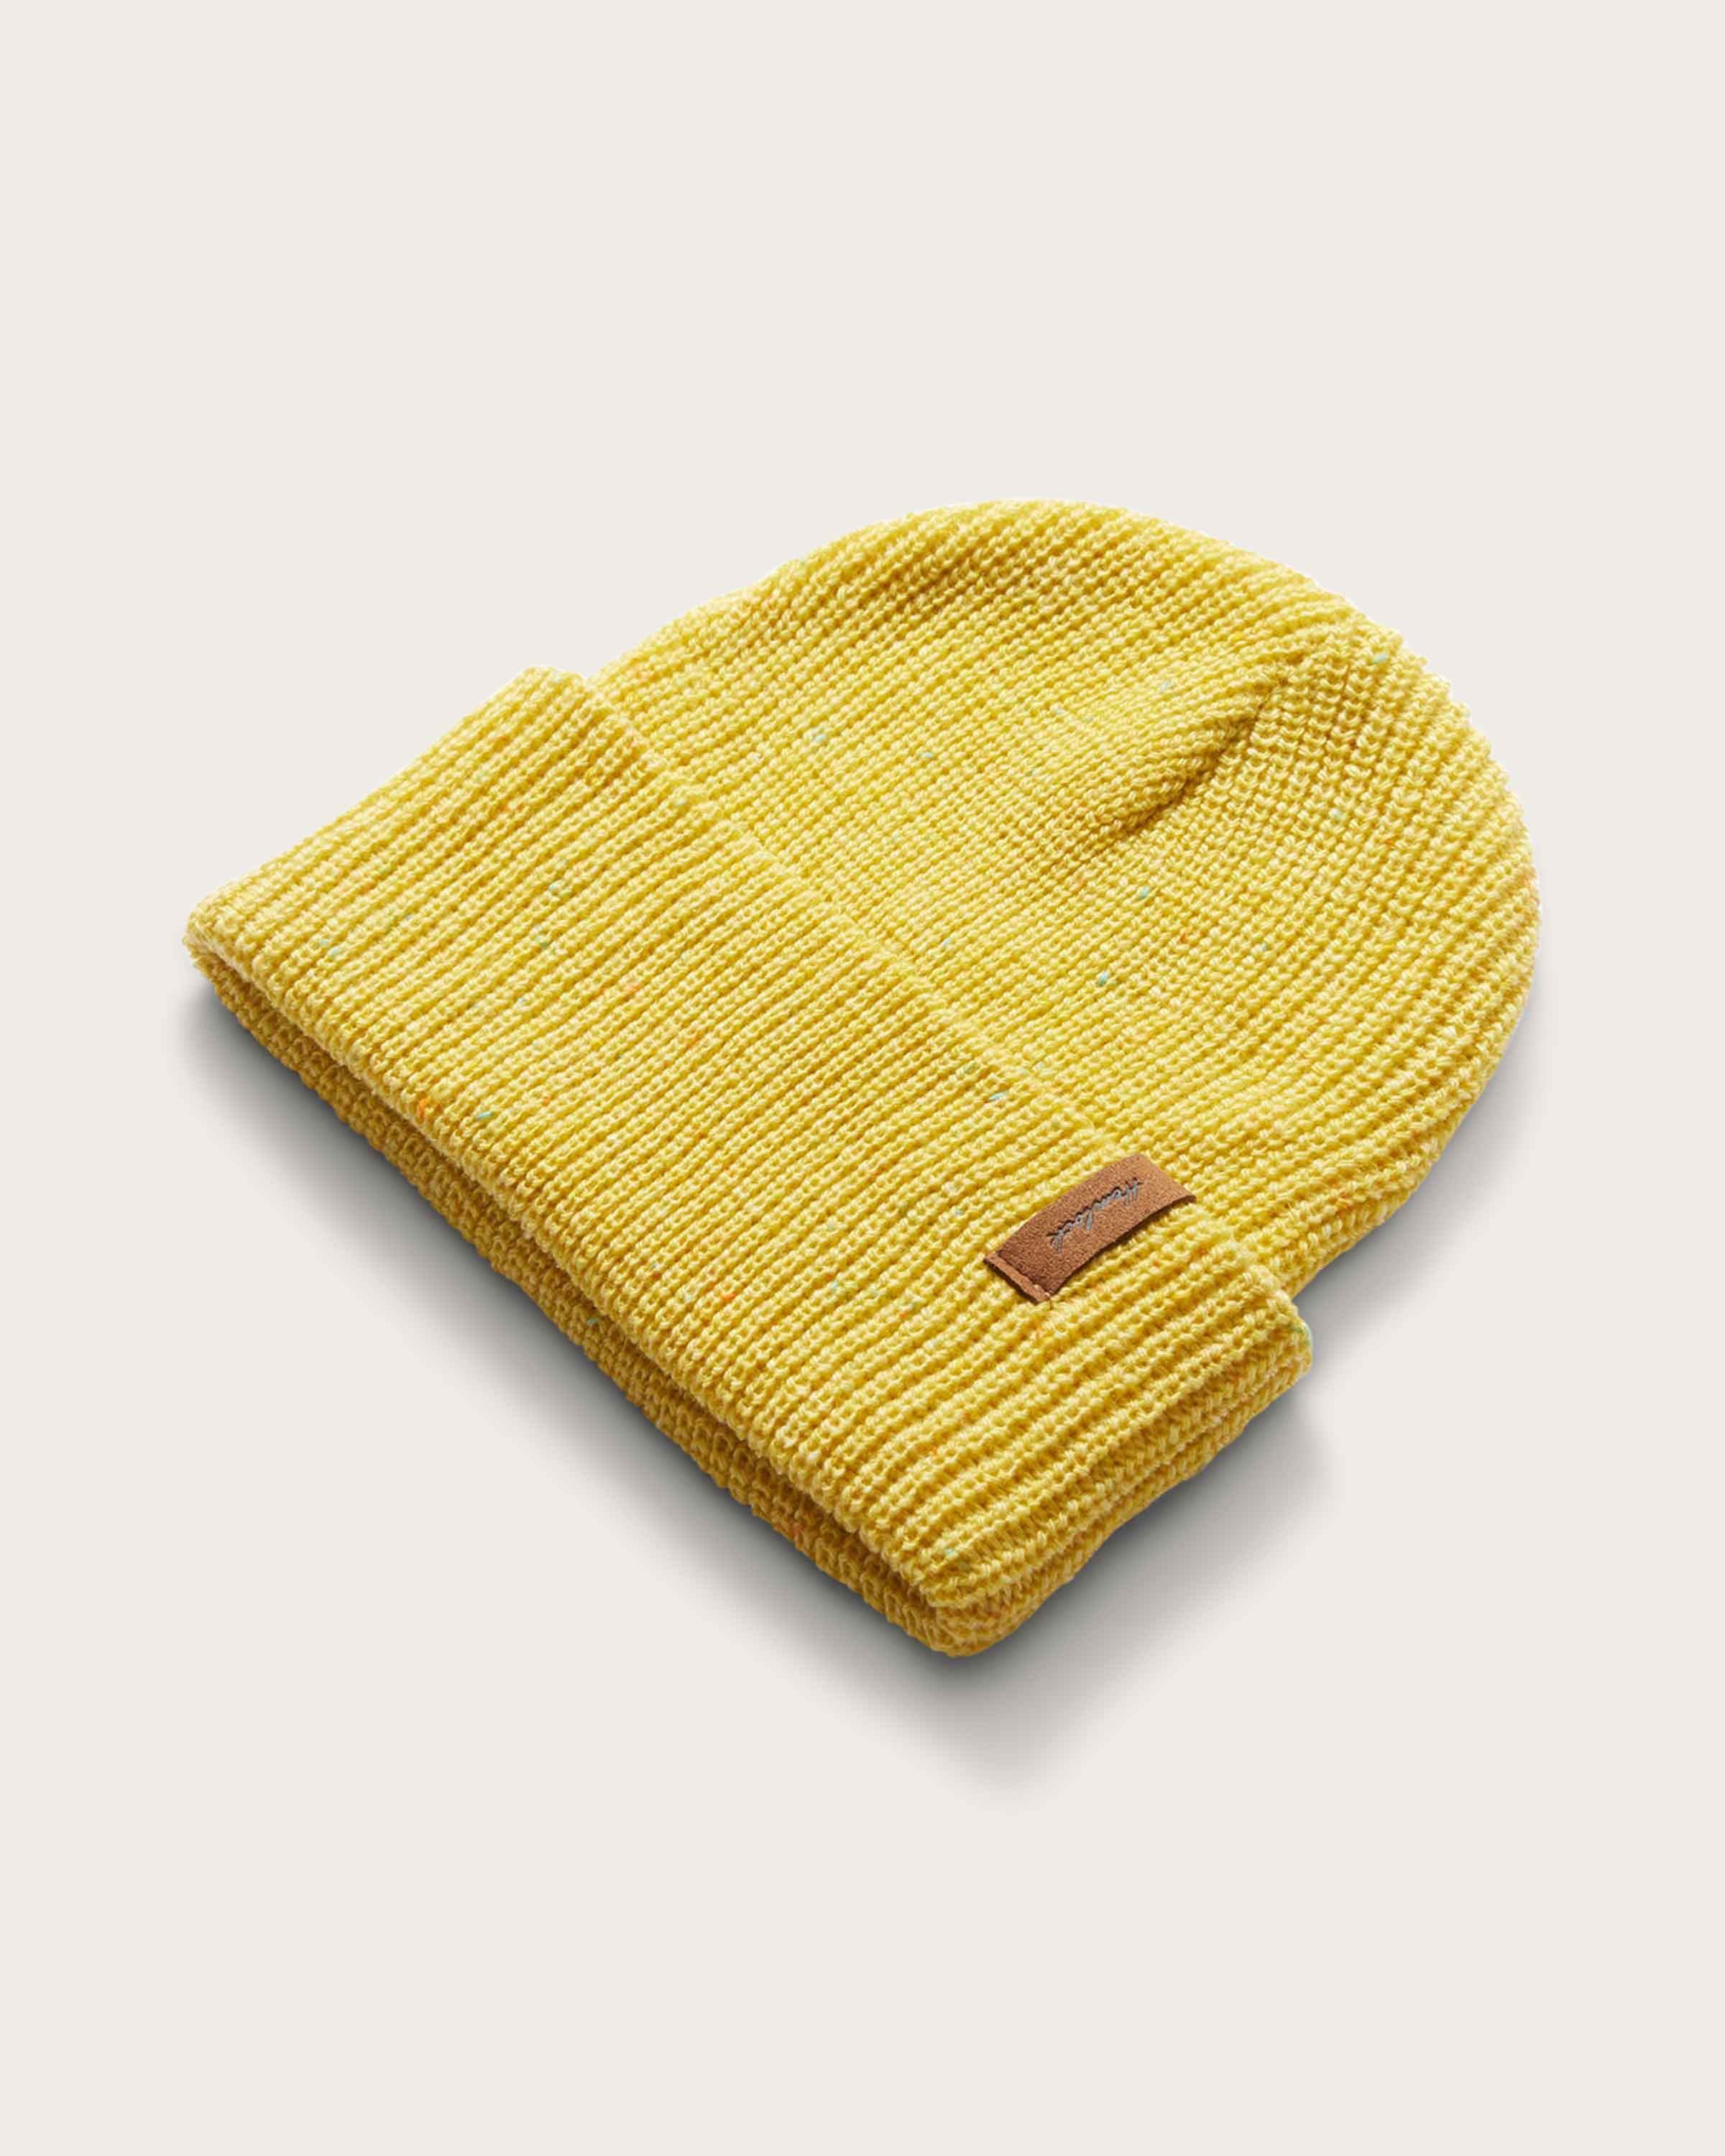 Ranger Beanie in Yellow Fleck - undefined - Hemlock Hat Co. Beanies - Adults